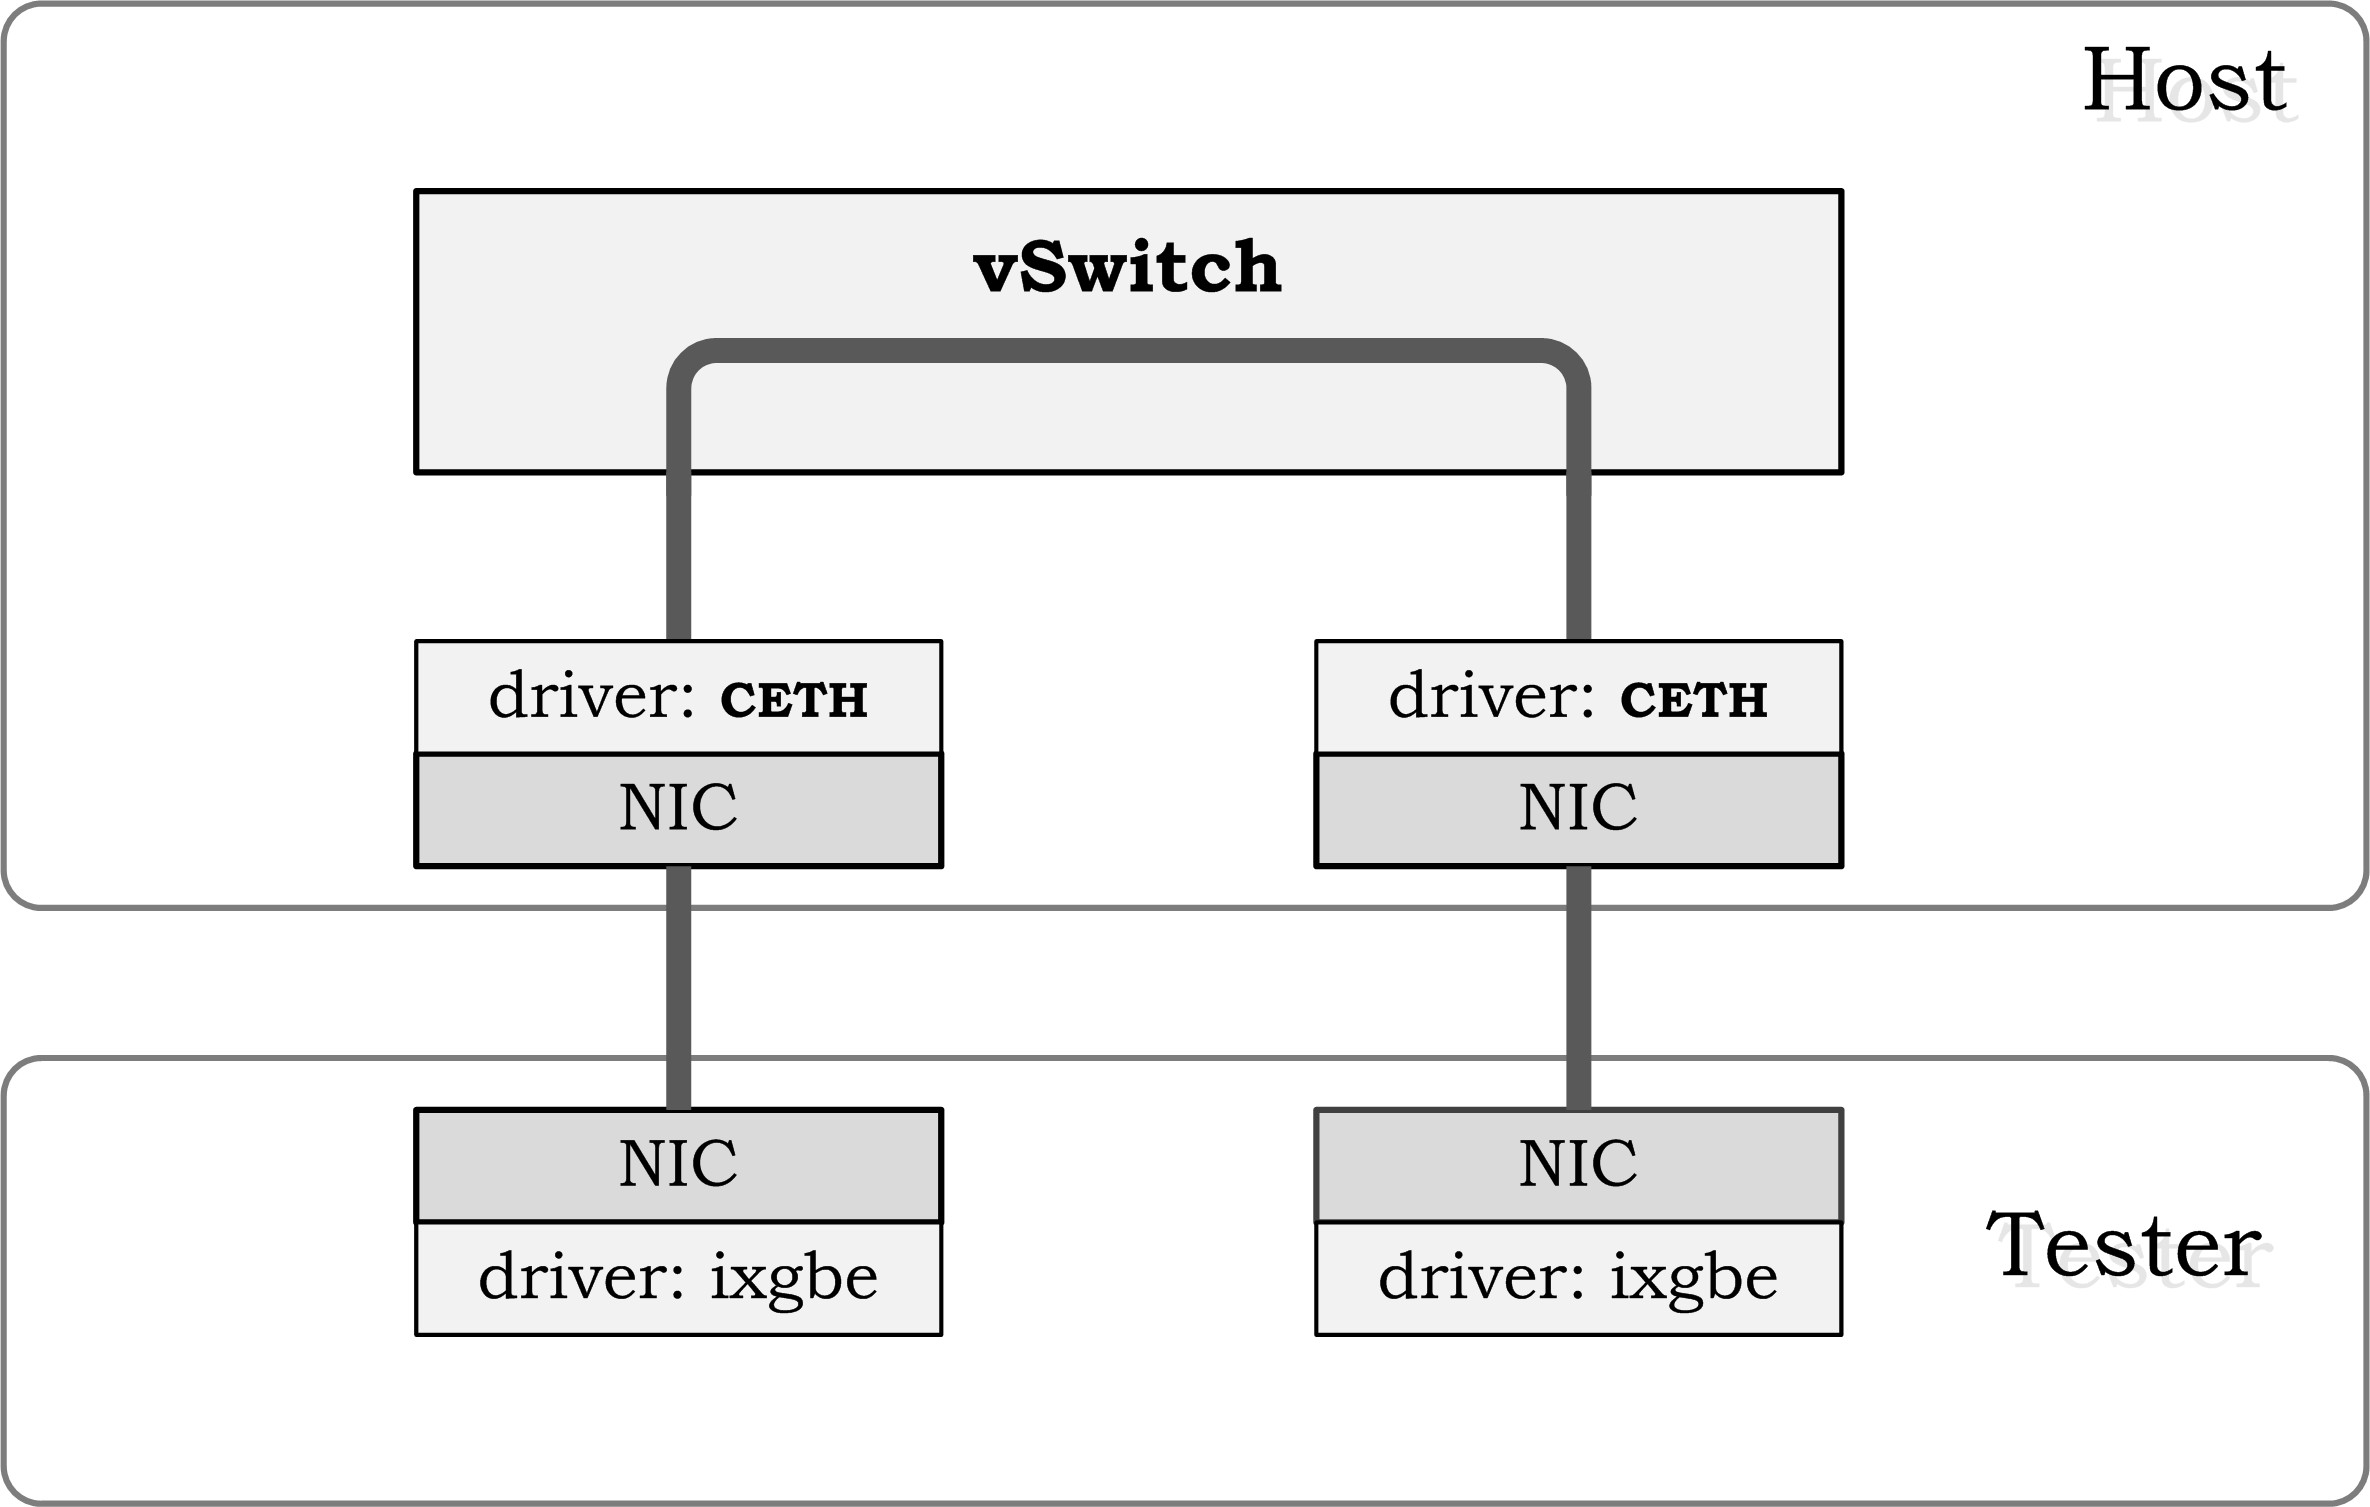 testsuites/vstf/vstf_scripts/vstf/controller/res/deployment/Tn.jpg